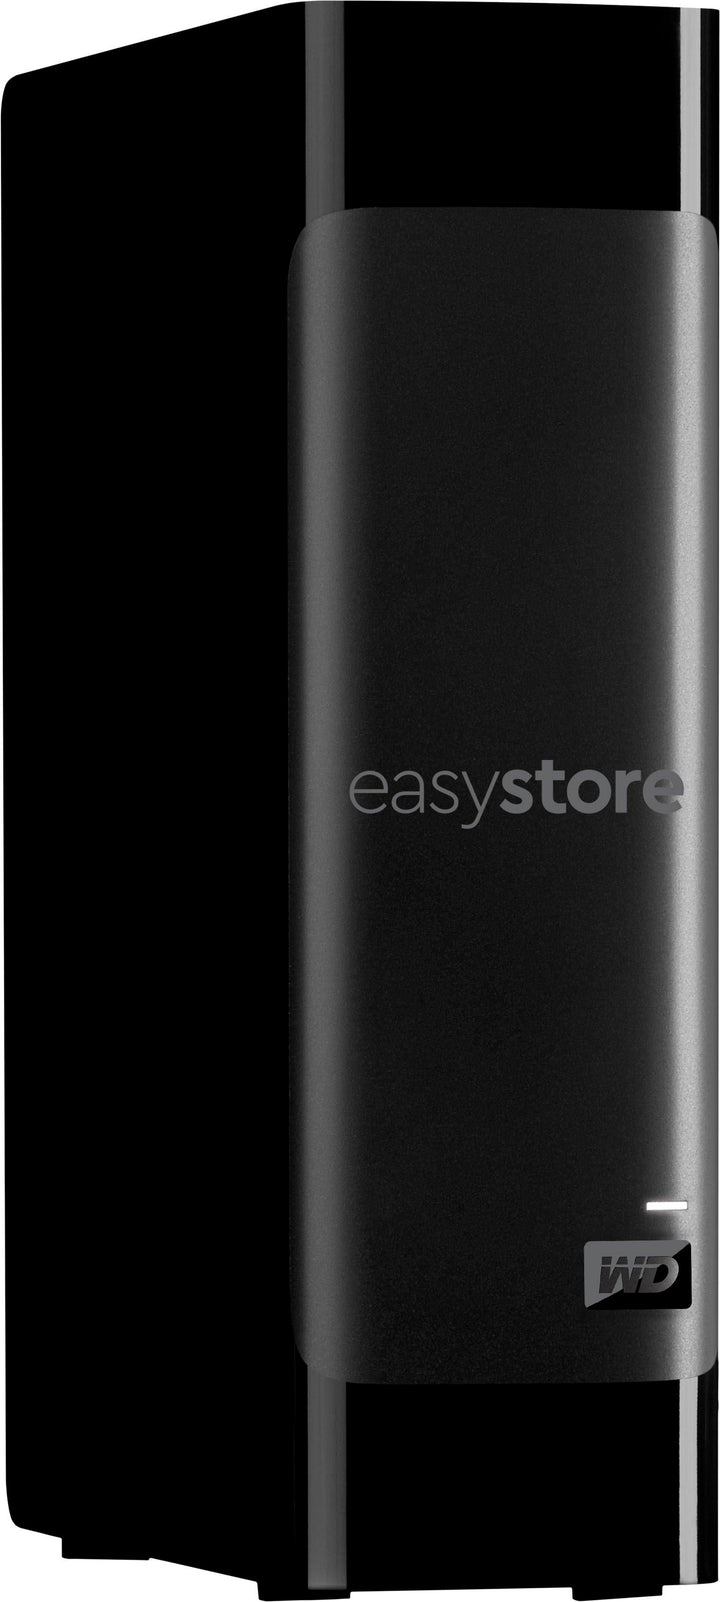 WD - easystore 18TB External USB 3.0 Hard Drive - Black_3